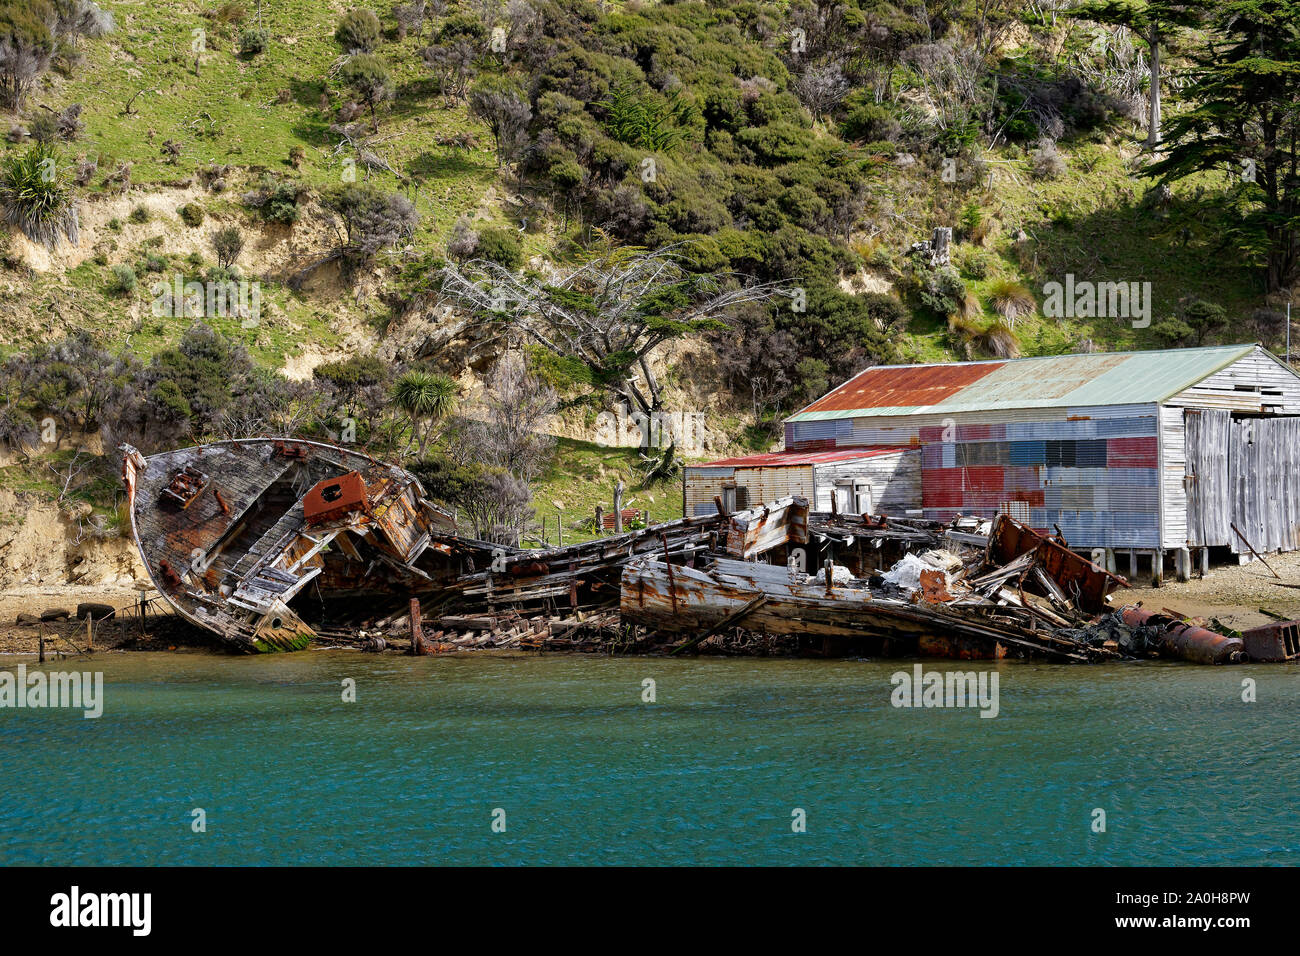 Shipwreck on the foreshore, Marlborough Sounds, New Zealand. Stock Photo